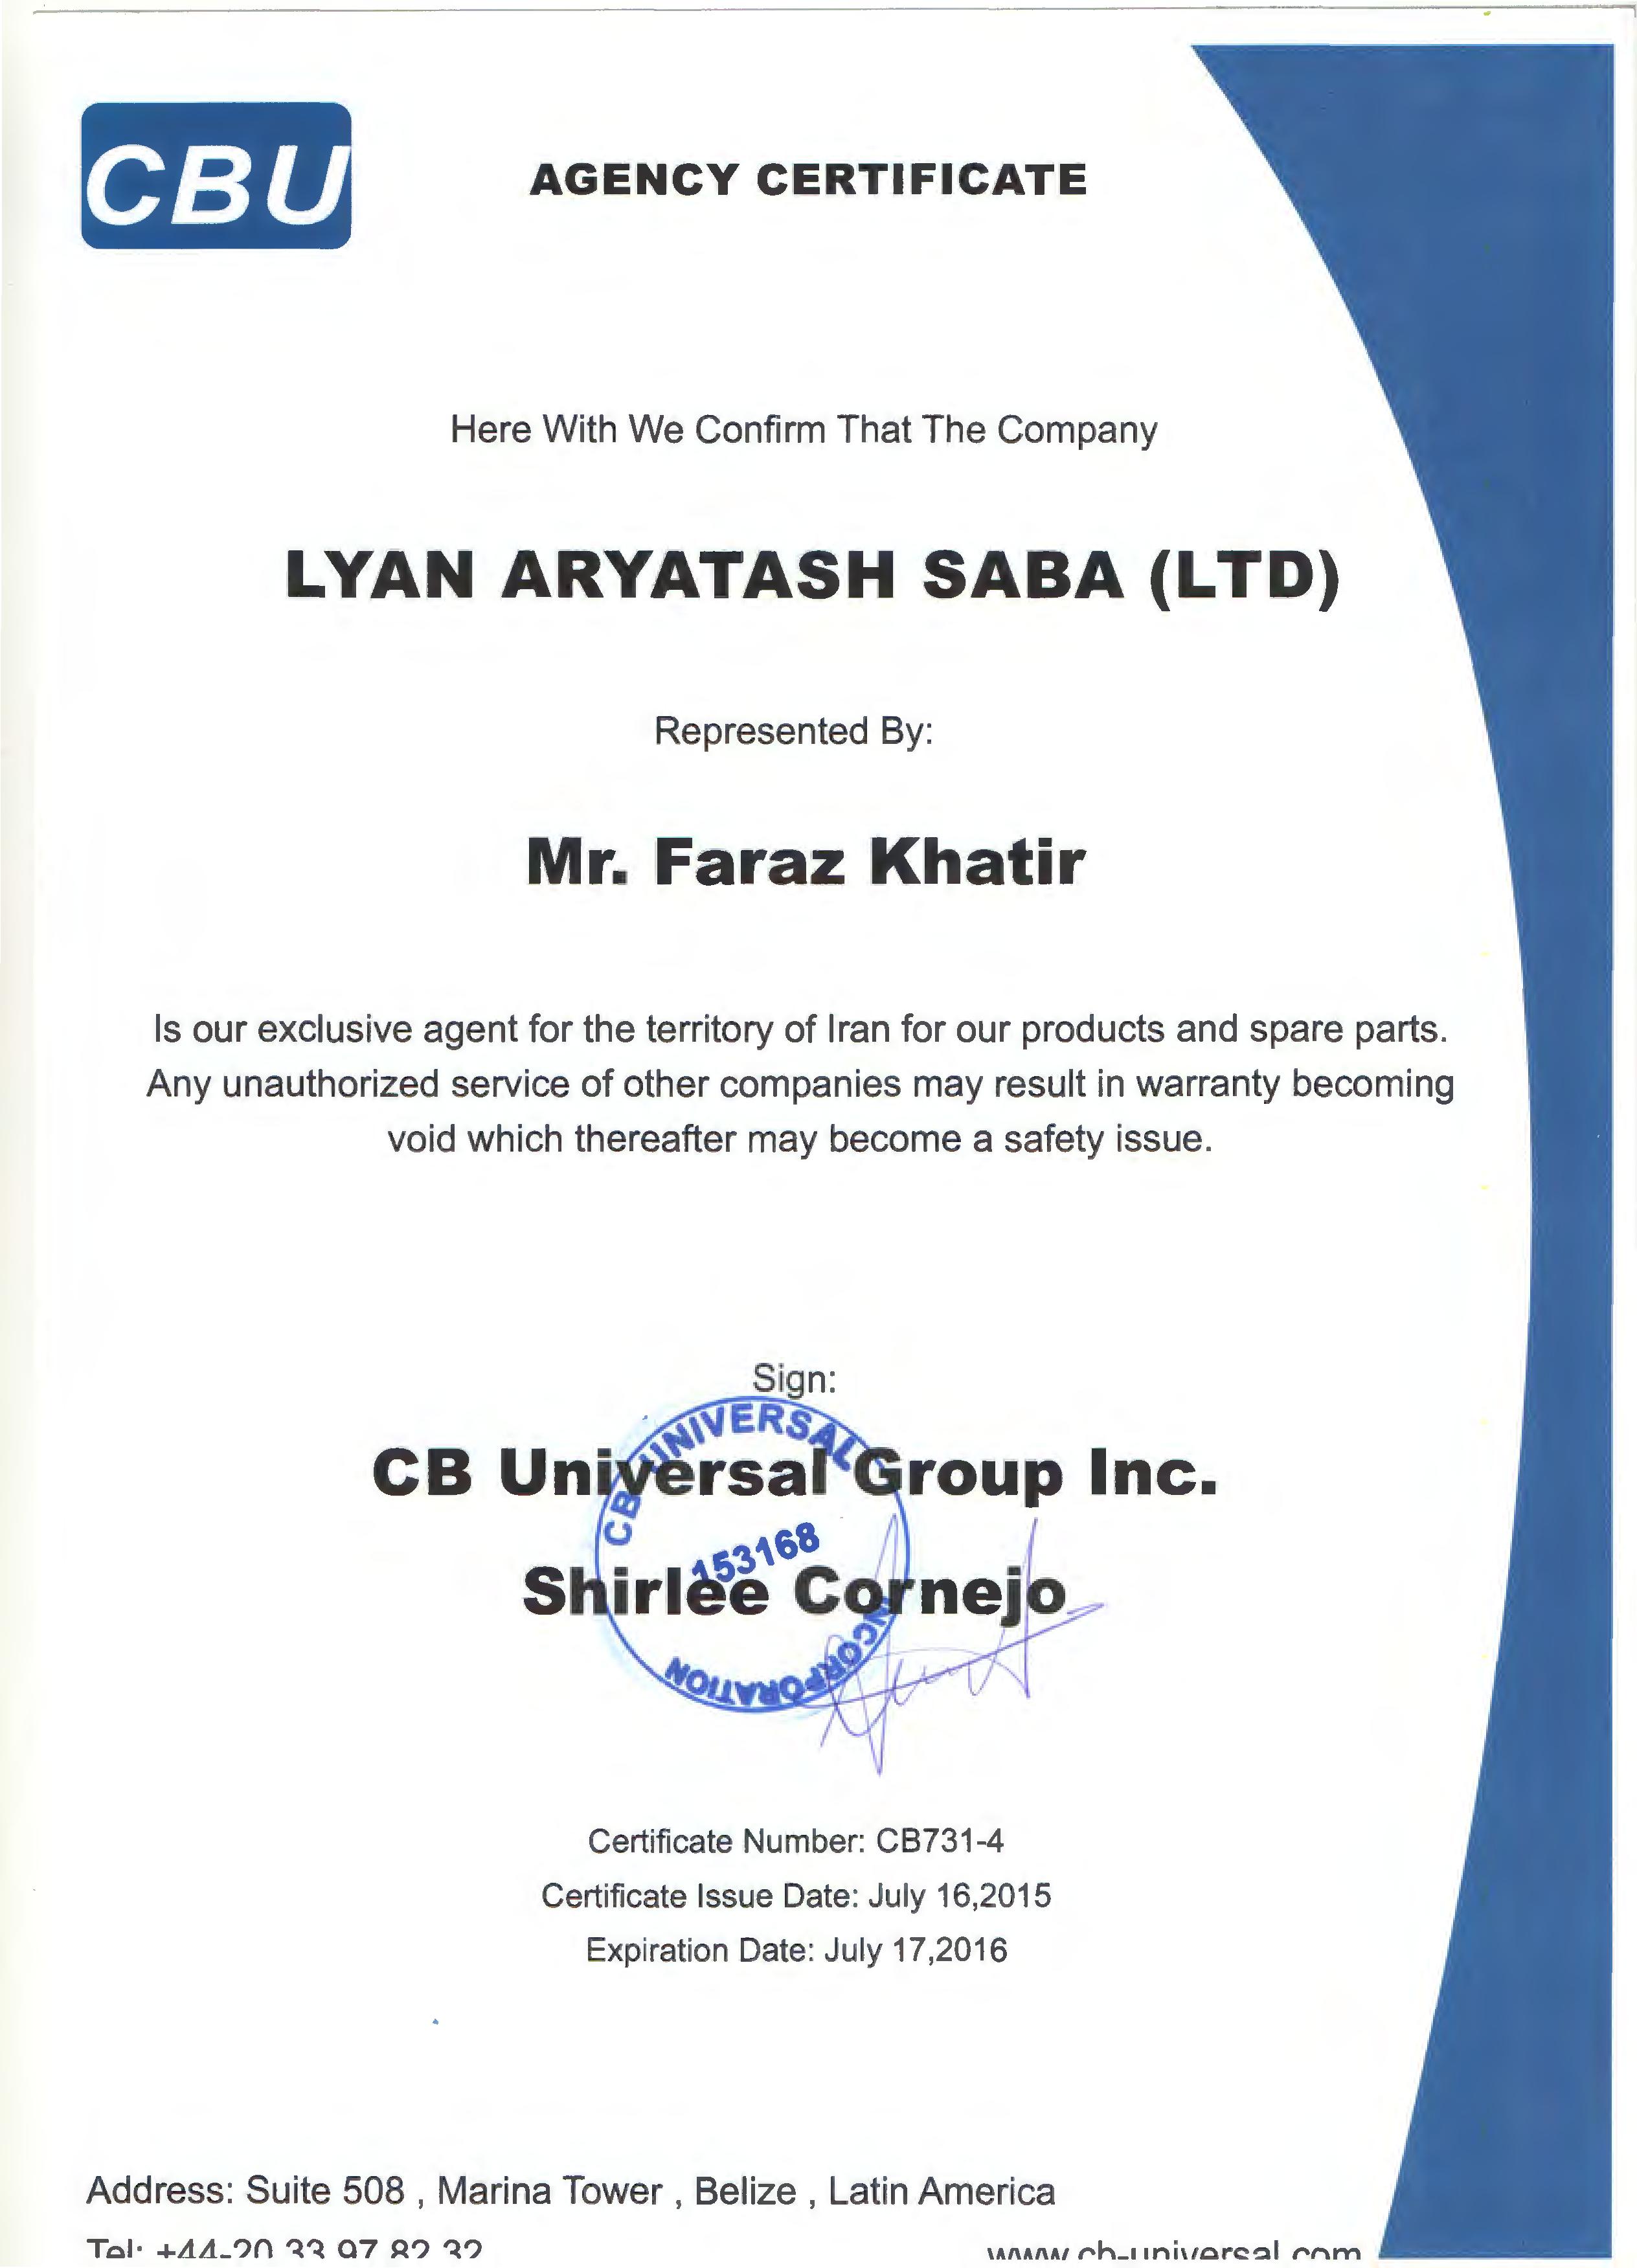 Agency Certificate CBU